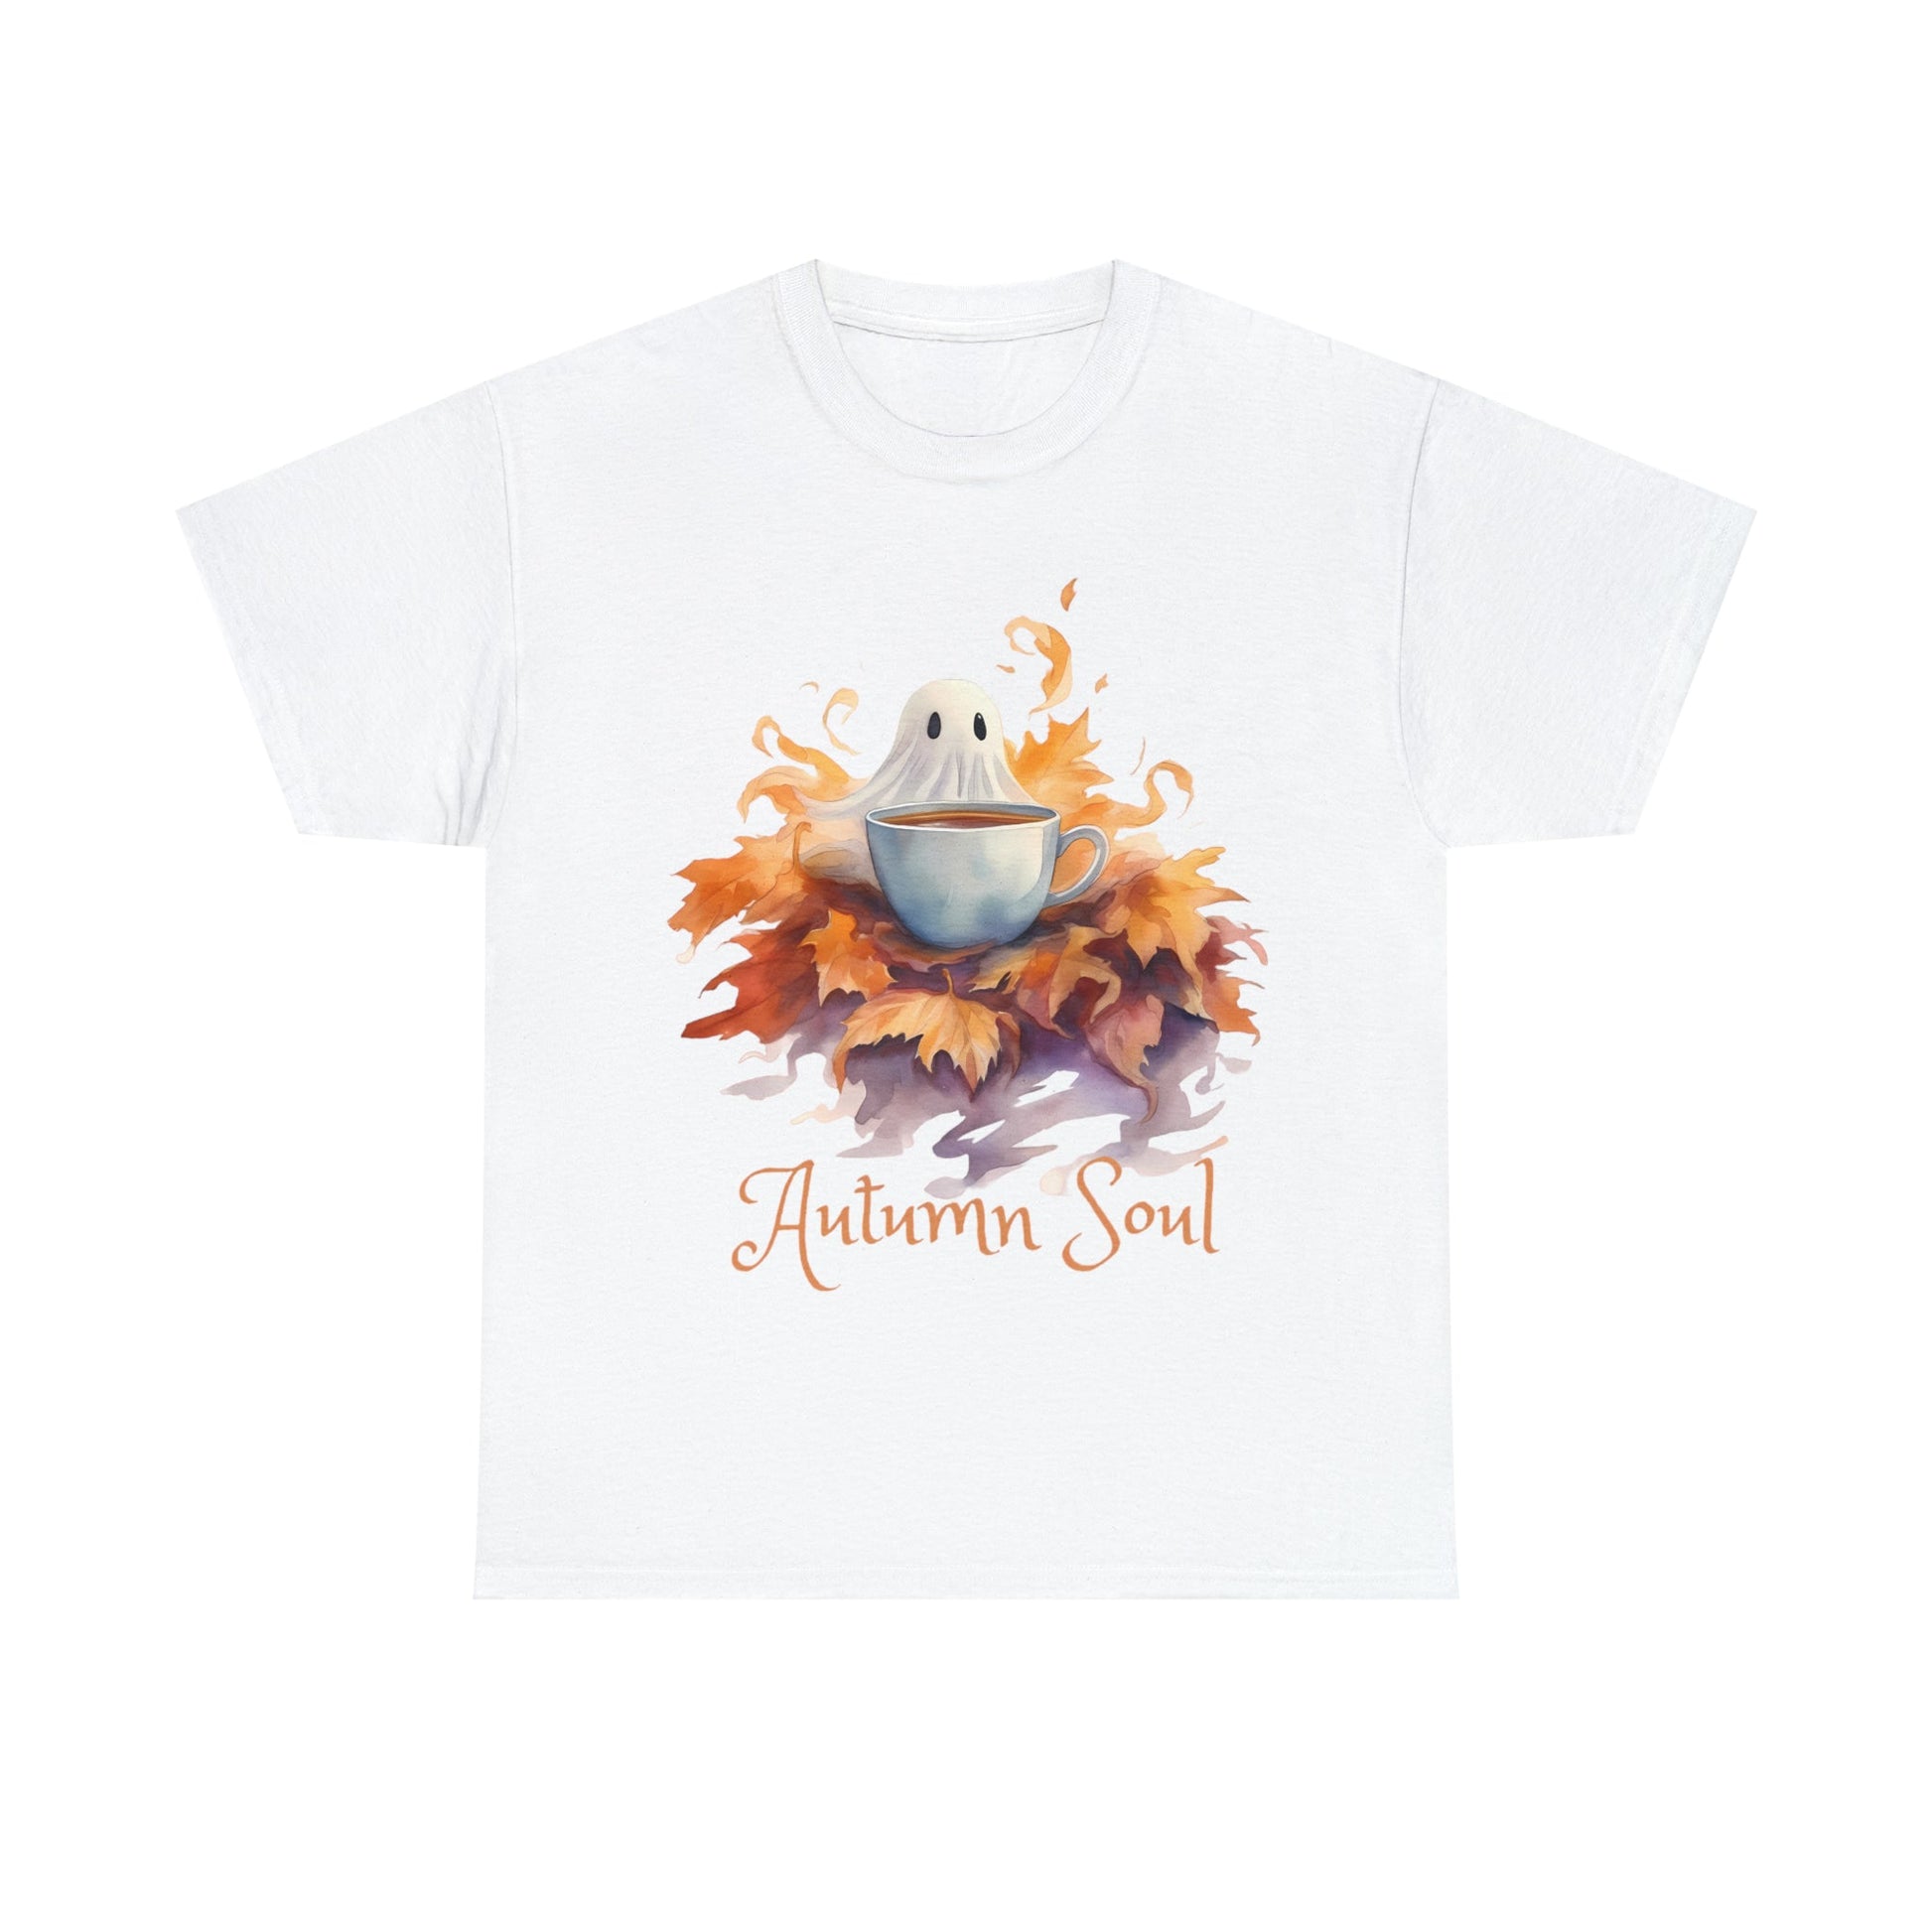 Autumn Soul Cute Ghost in Pile of Leaves Tee ShirtT - ShirtVTZdesignsWhiteScoffeeCrew neckDTG